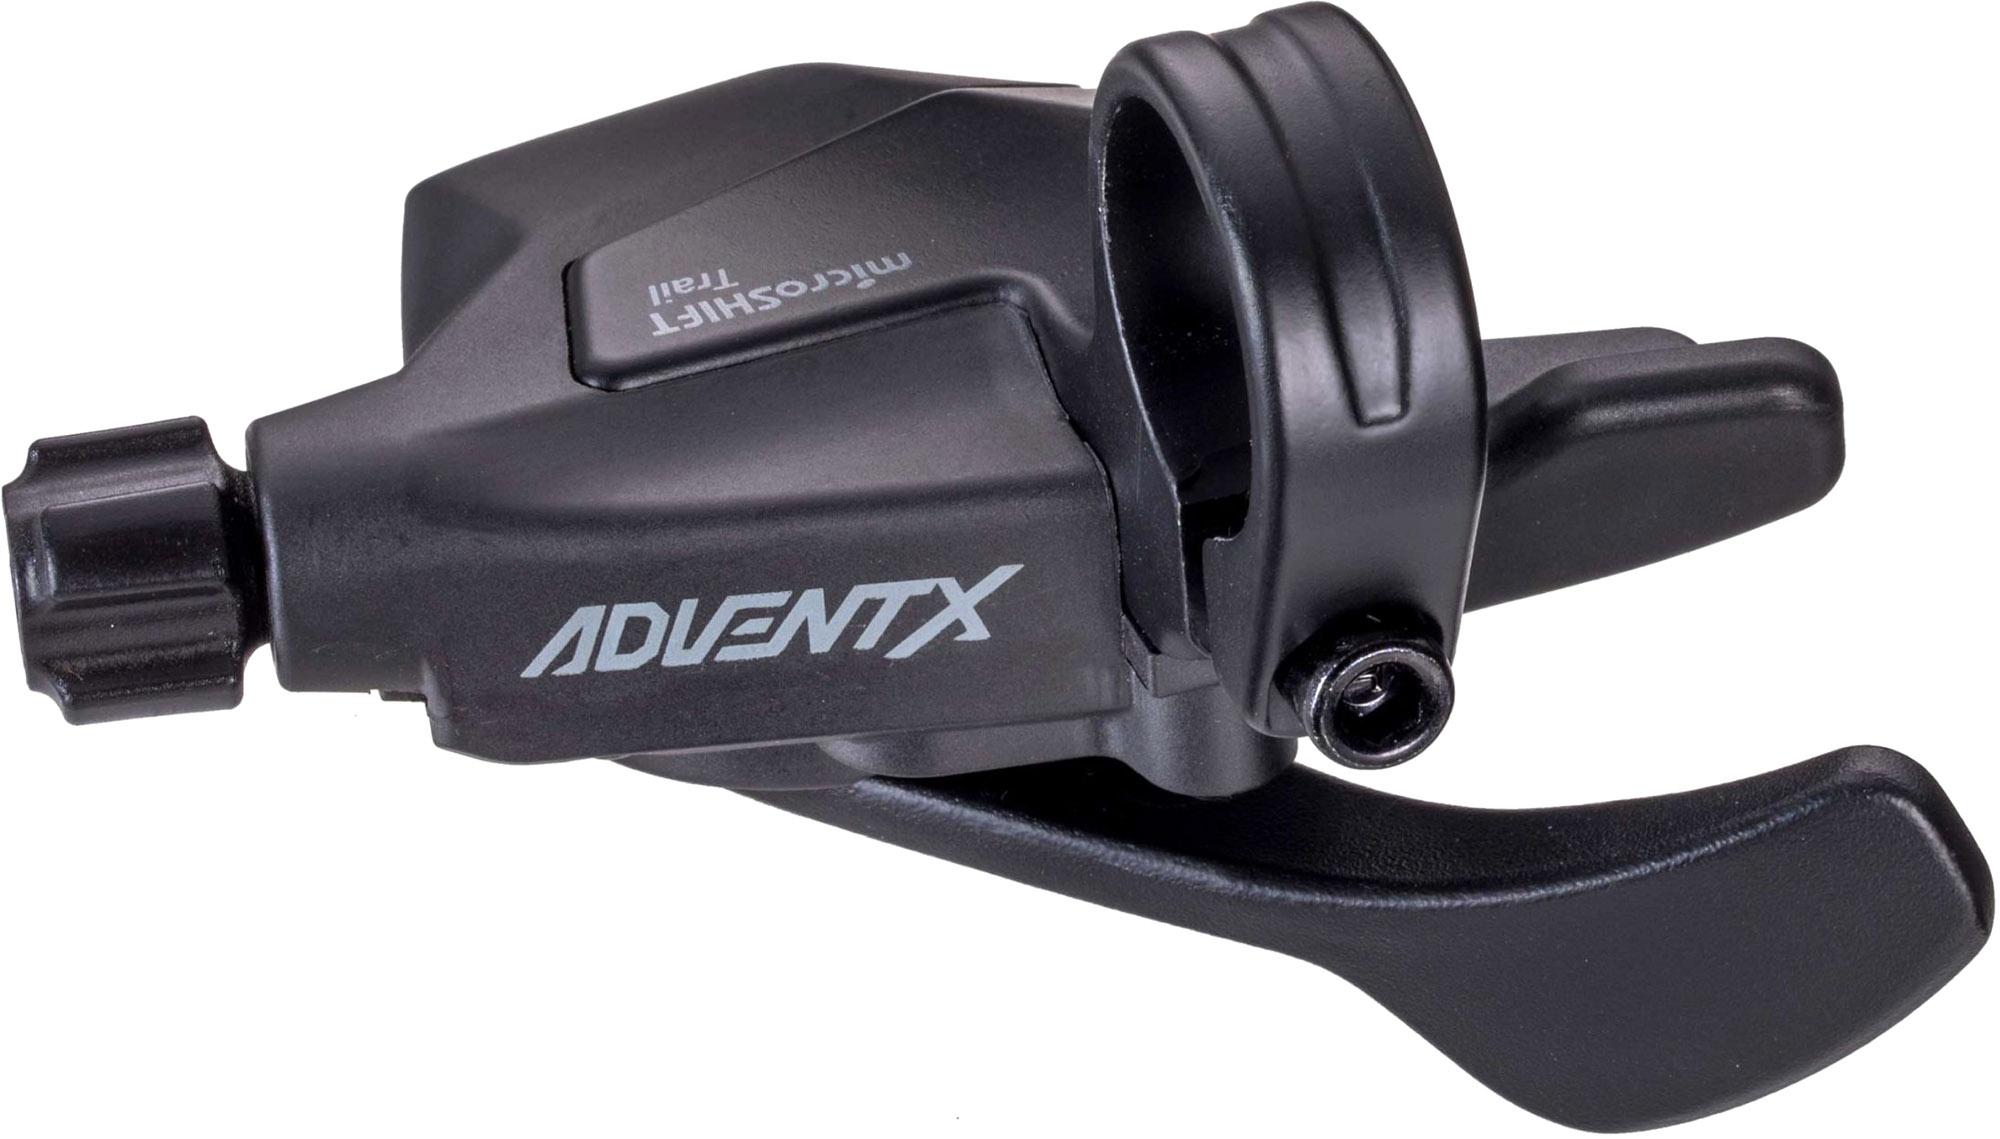 Microshift Advent X M9505 10 Speed Trigger Shifter - Black